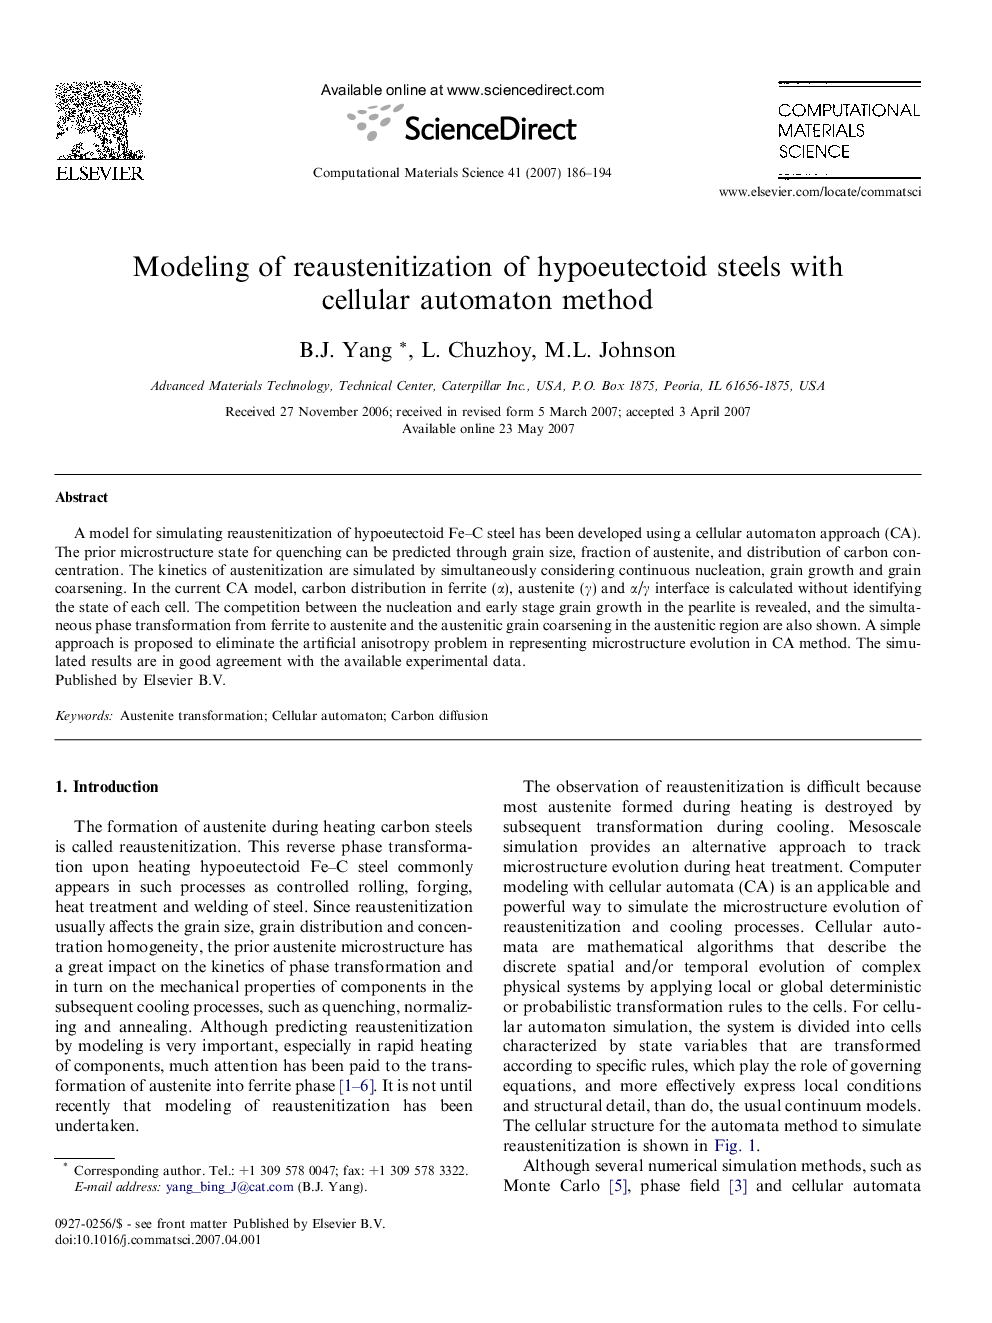 Modeling of reaustenitization of hypoeutectoid steels with cellular automaton method